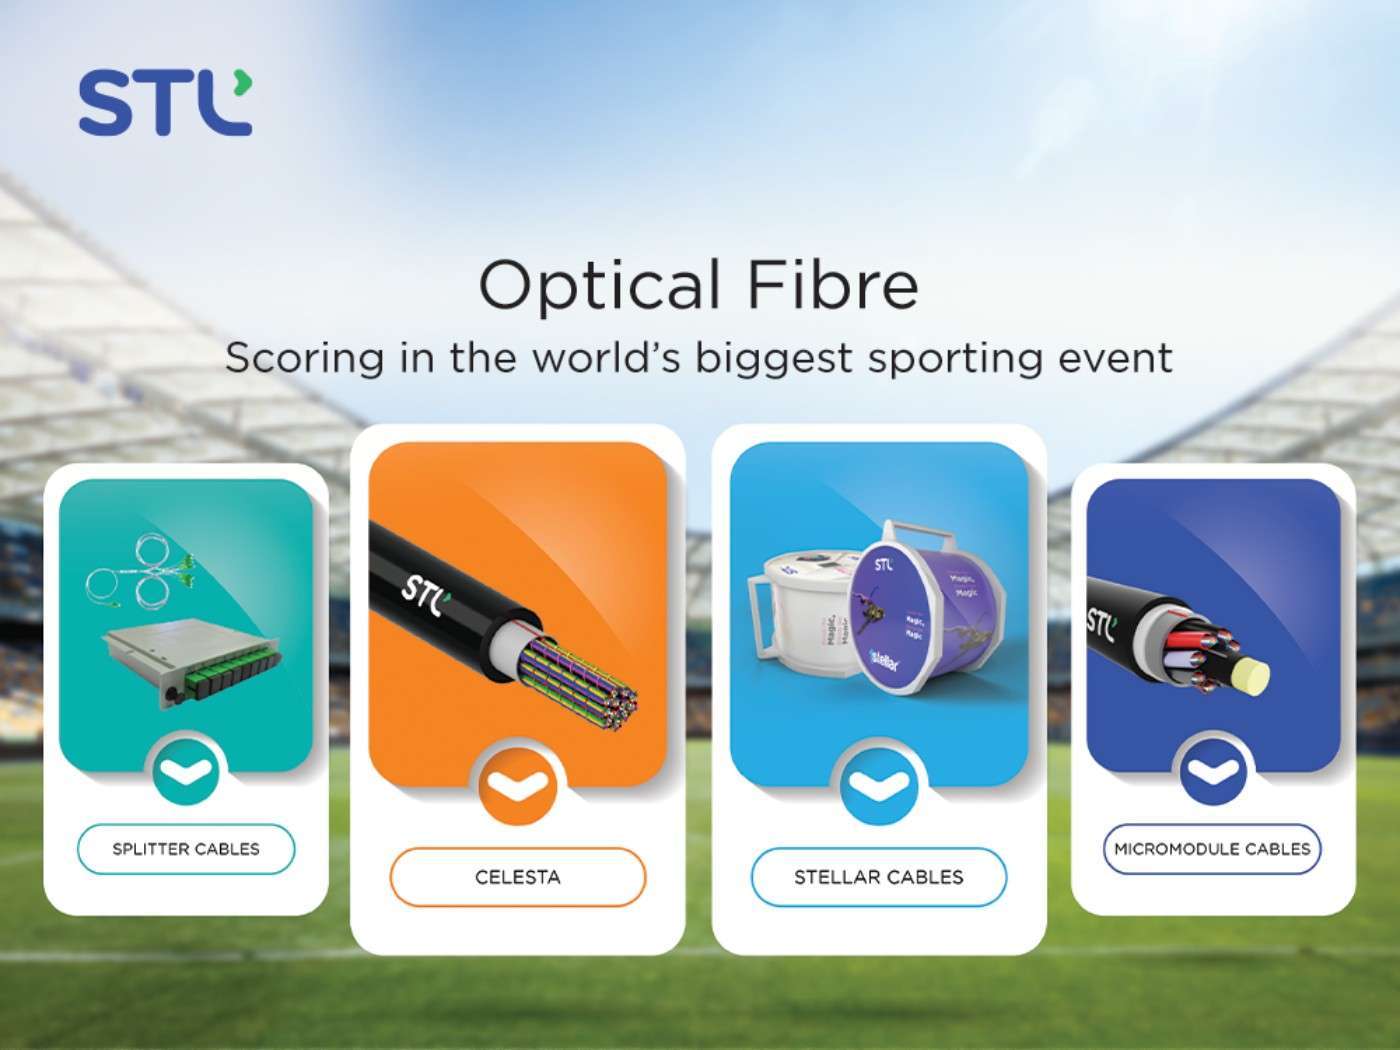 STL's Optical fiber: Scoring in the world’s biggest sporting event